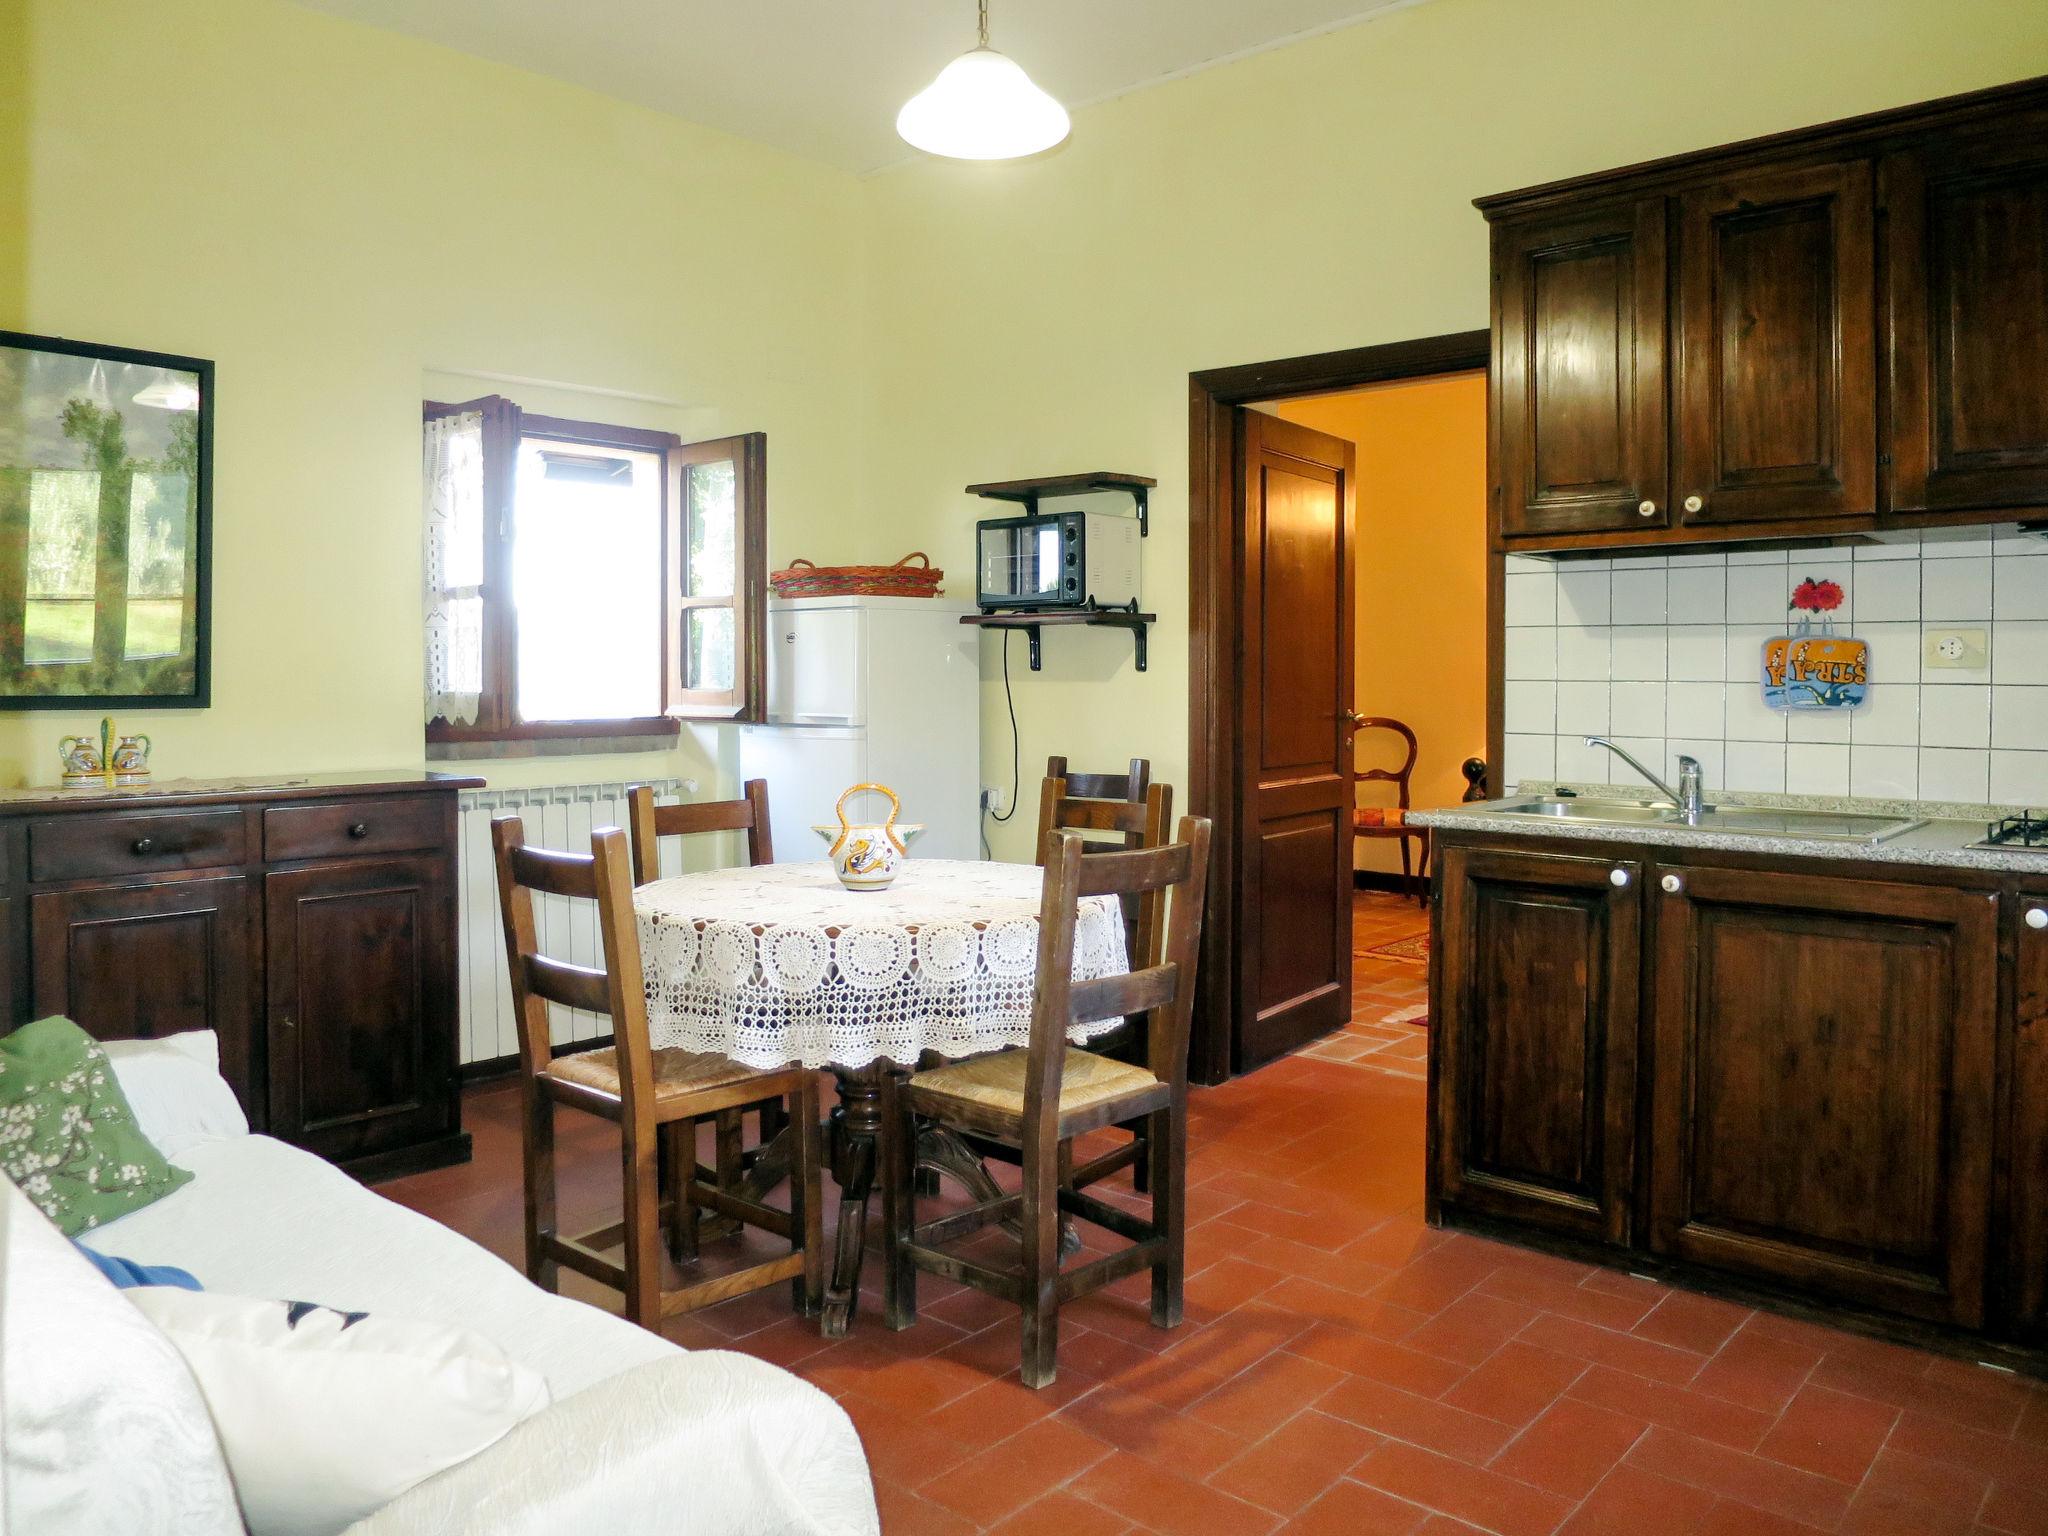 Photo 7 - 2 bedroom House in Monte Santa Maria Tiberina with swimming pool